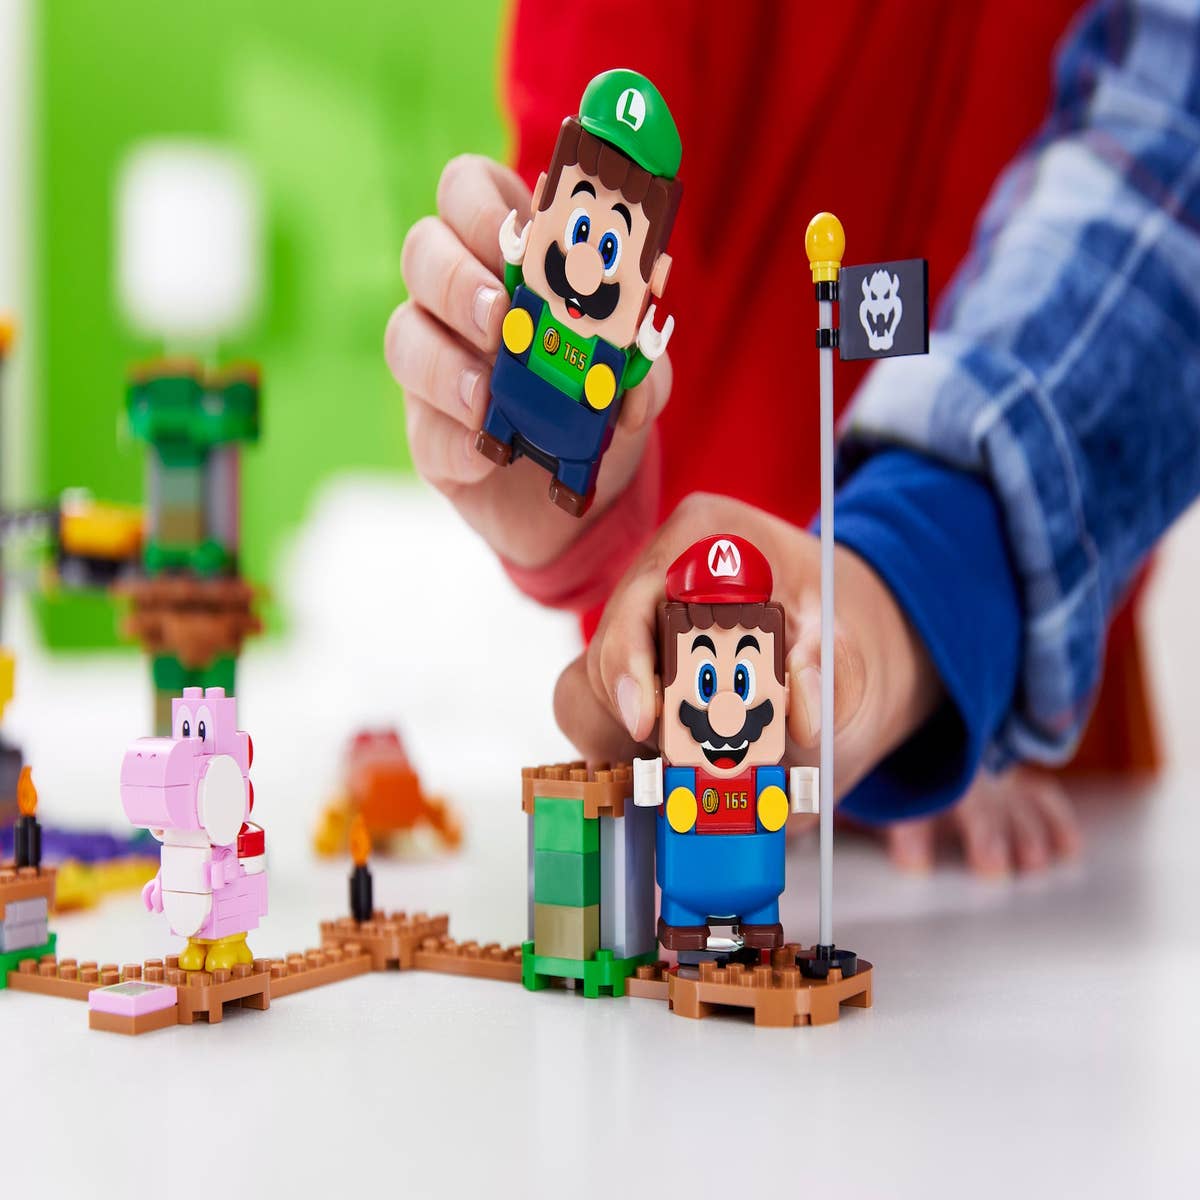 Adding Luigi and multiplayer, Lego Mario finally feels like it's